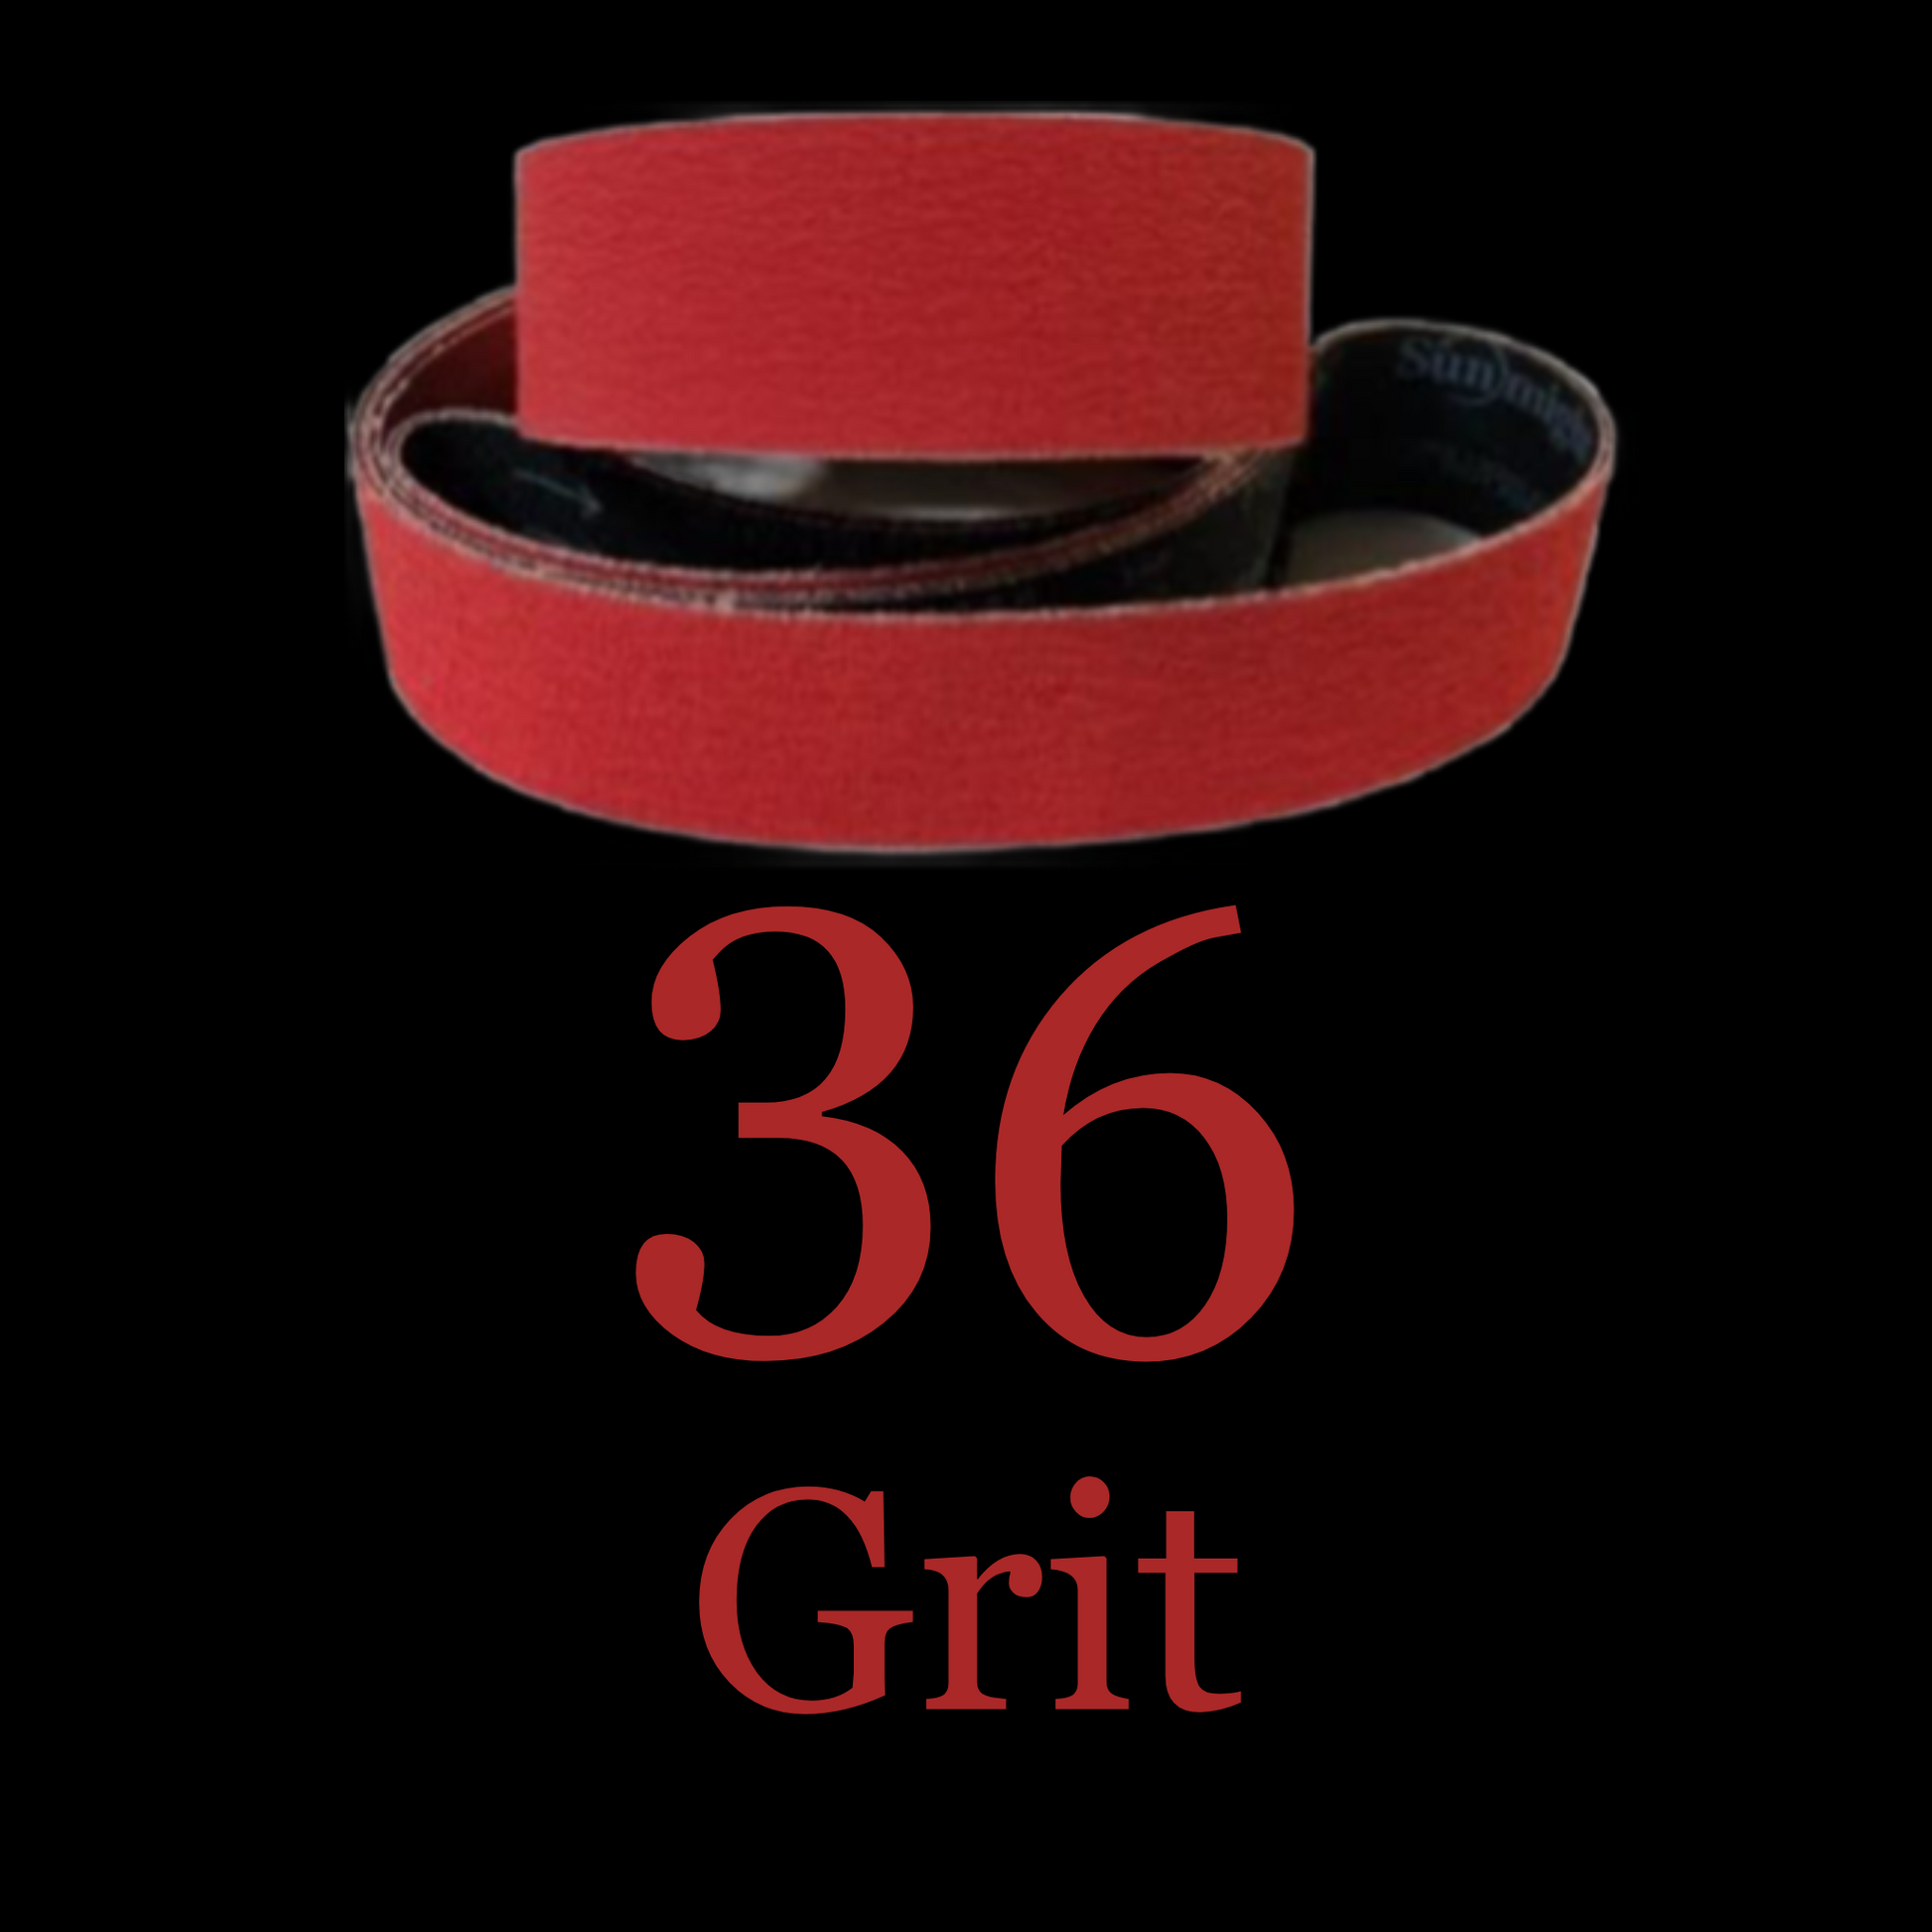 2” x 72” Metal Eater Premium Ceramic Belts 36 Grit